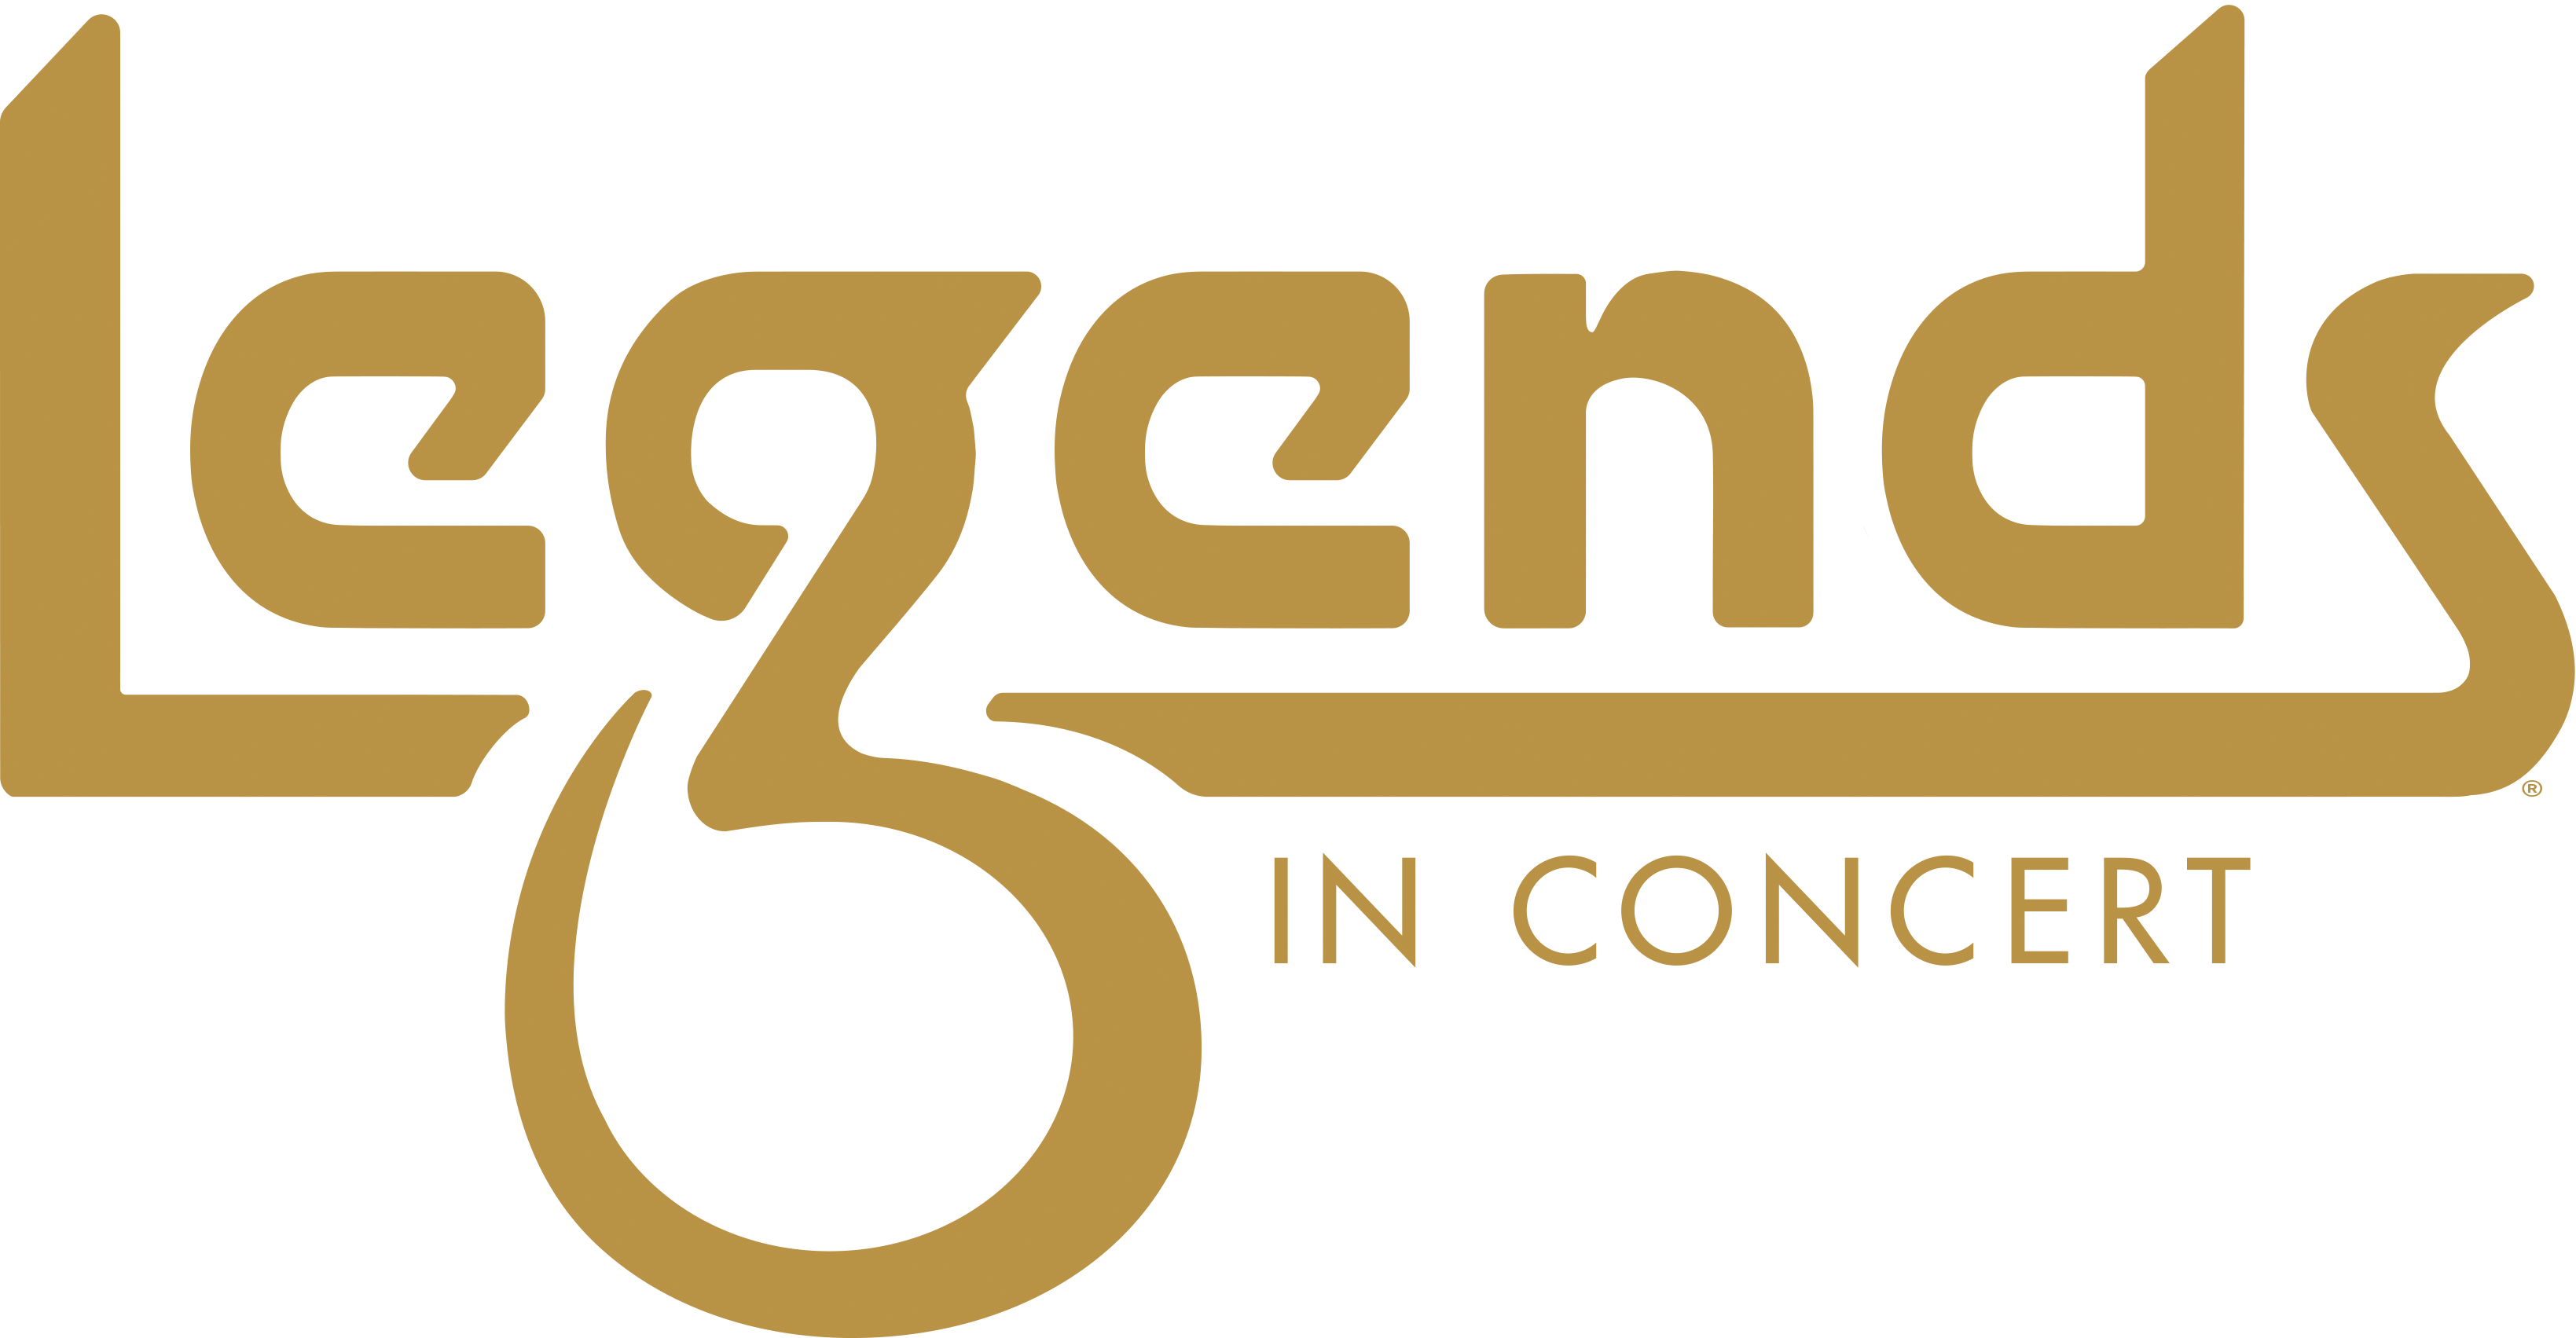 Legends_Logo_4c.png
